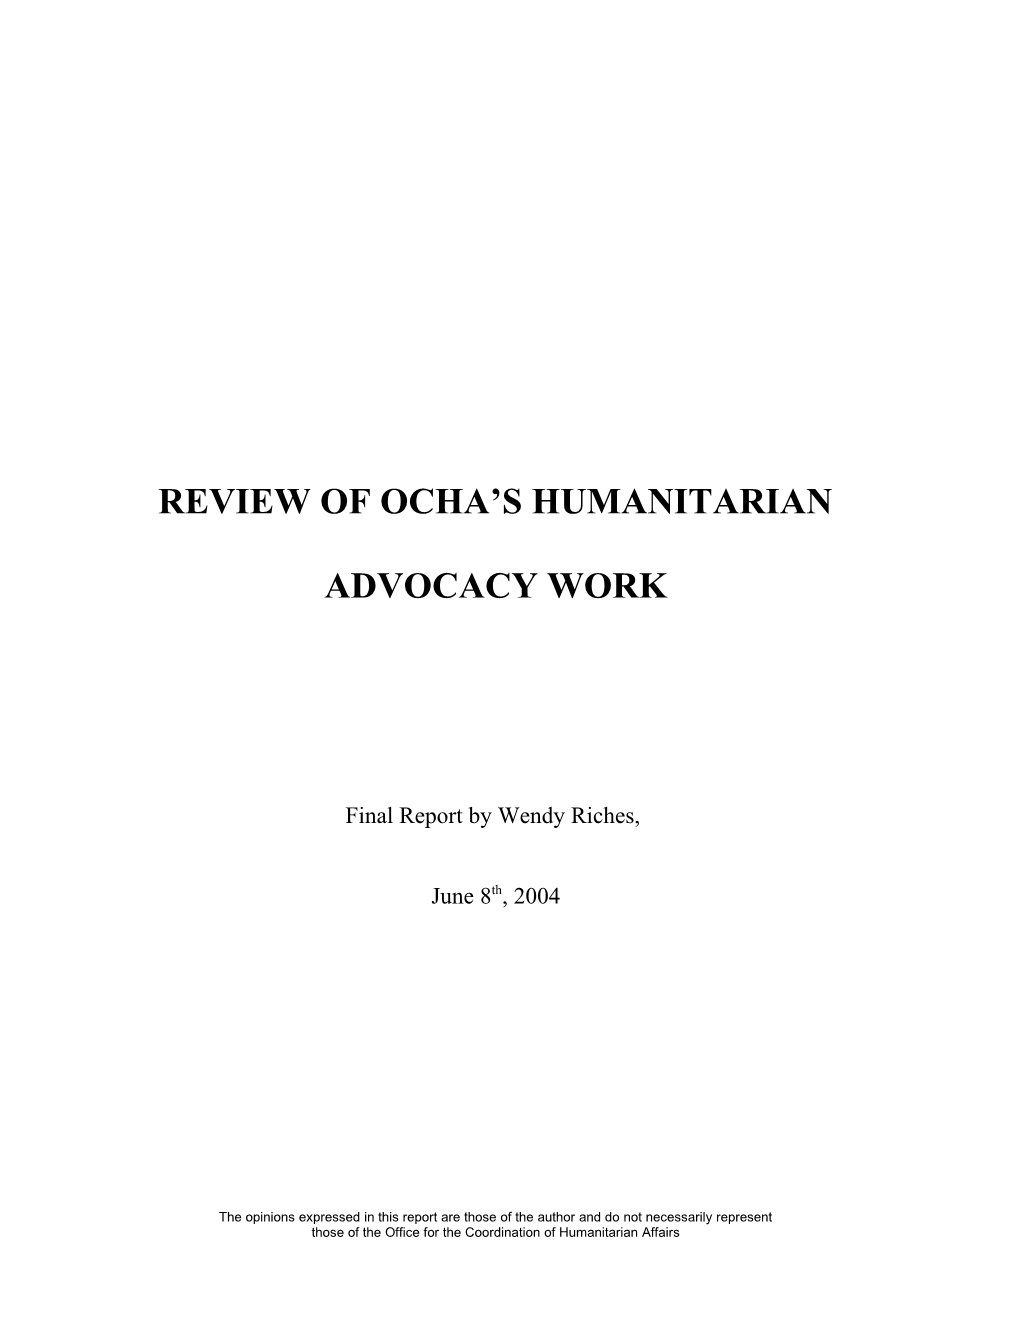 Review of OCHA's Humanitarian Advocacy Work